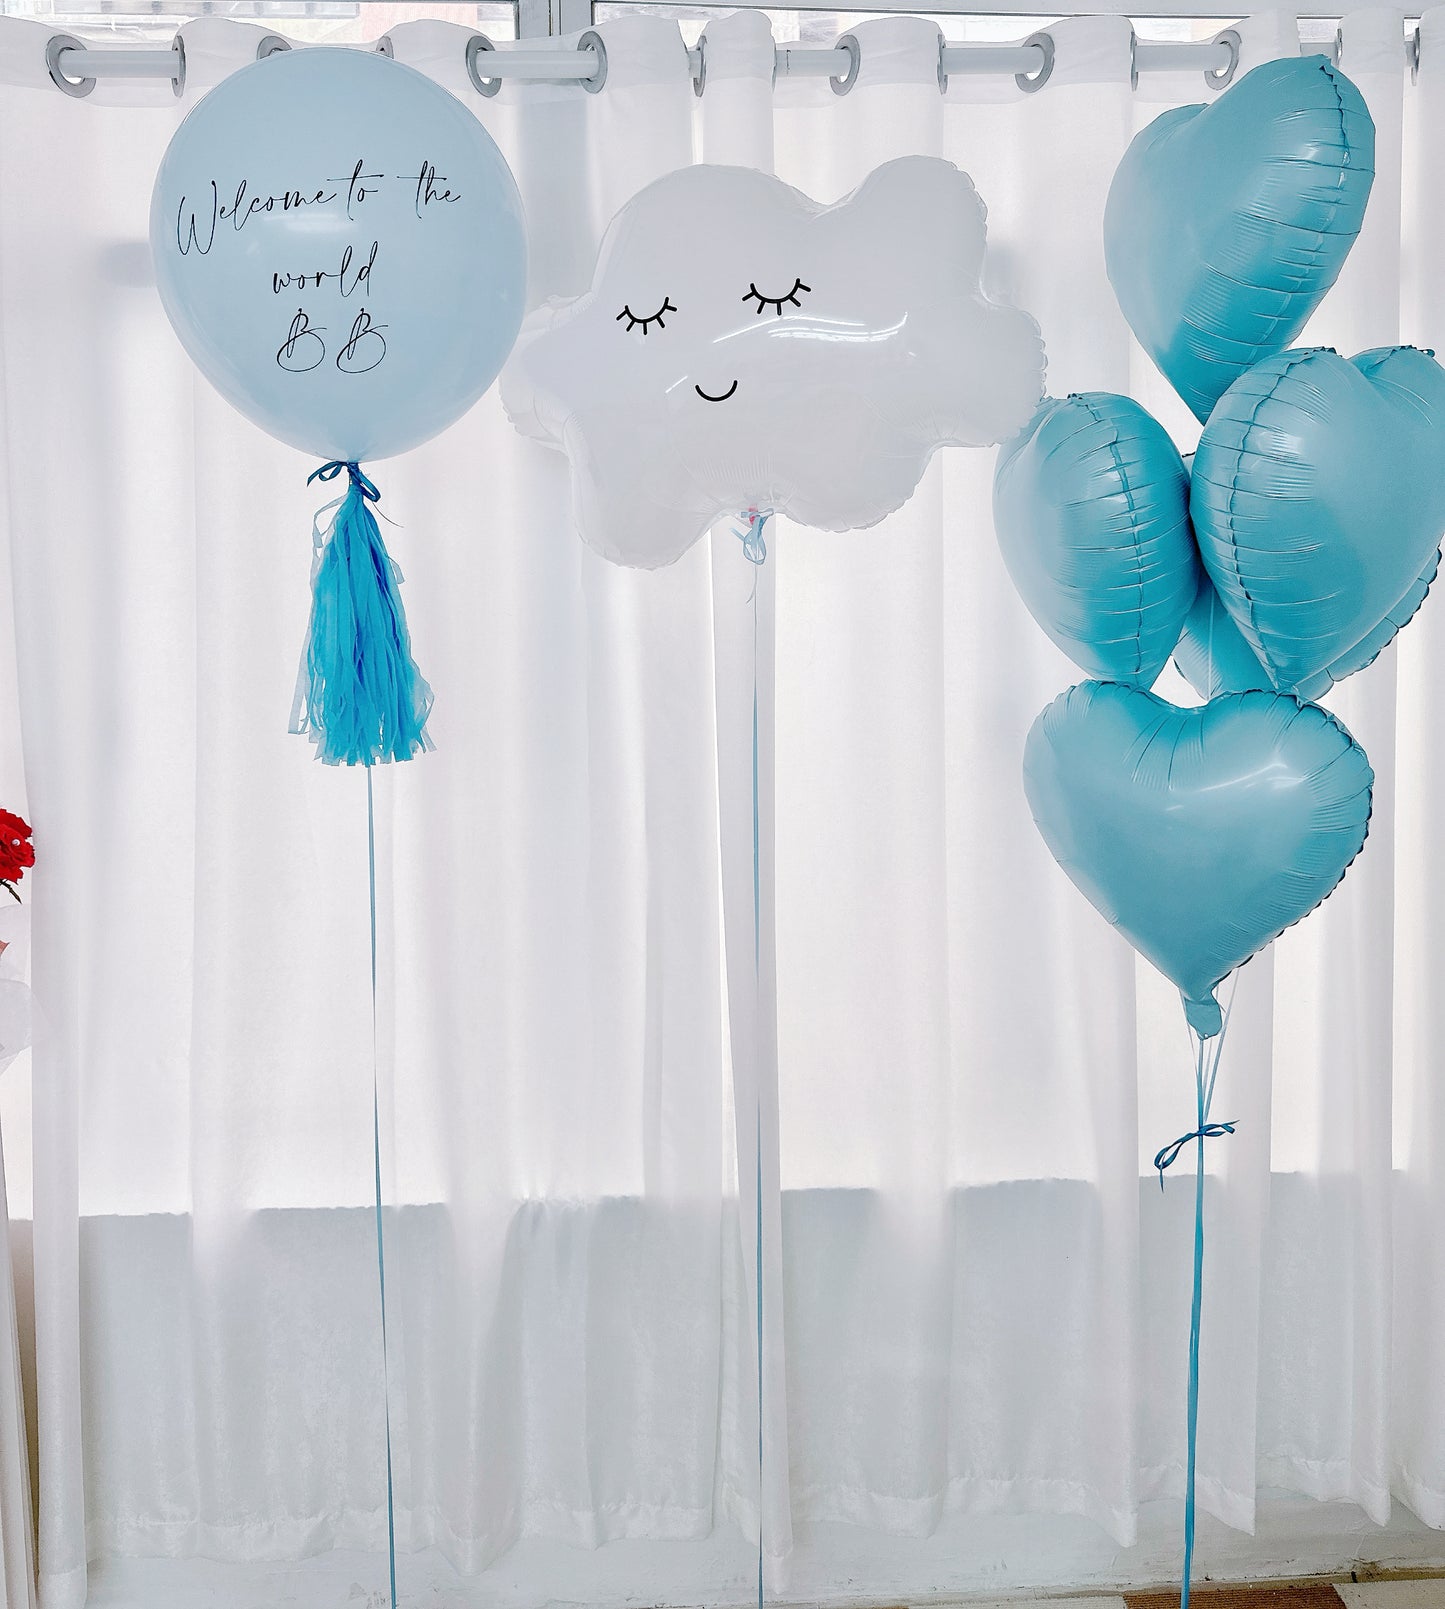 Welcome Baby氣球套裝 Balloon Bouquet Set